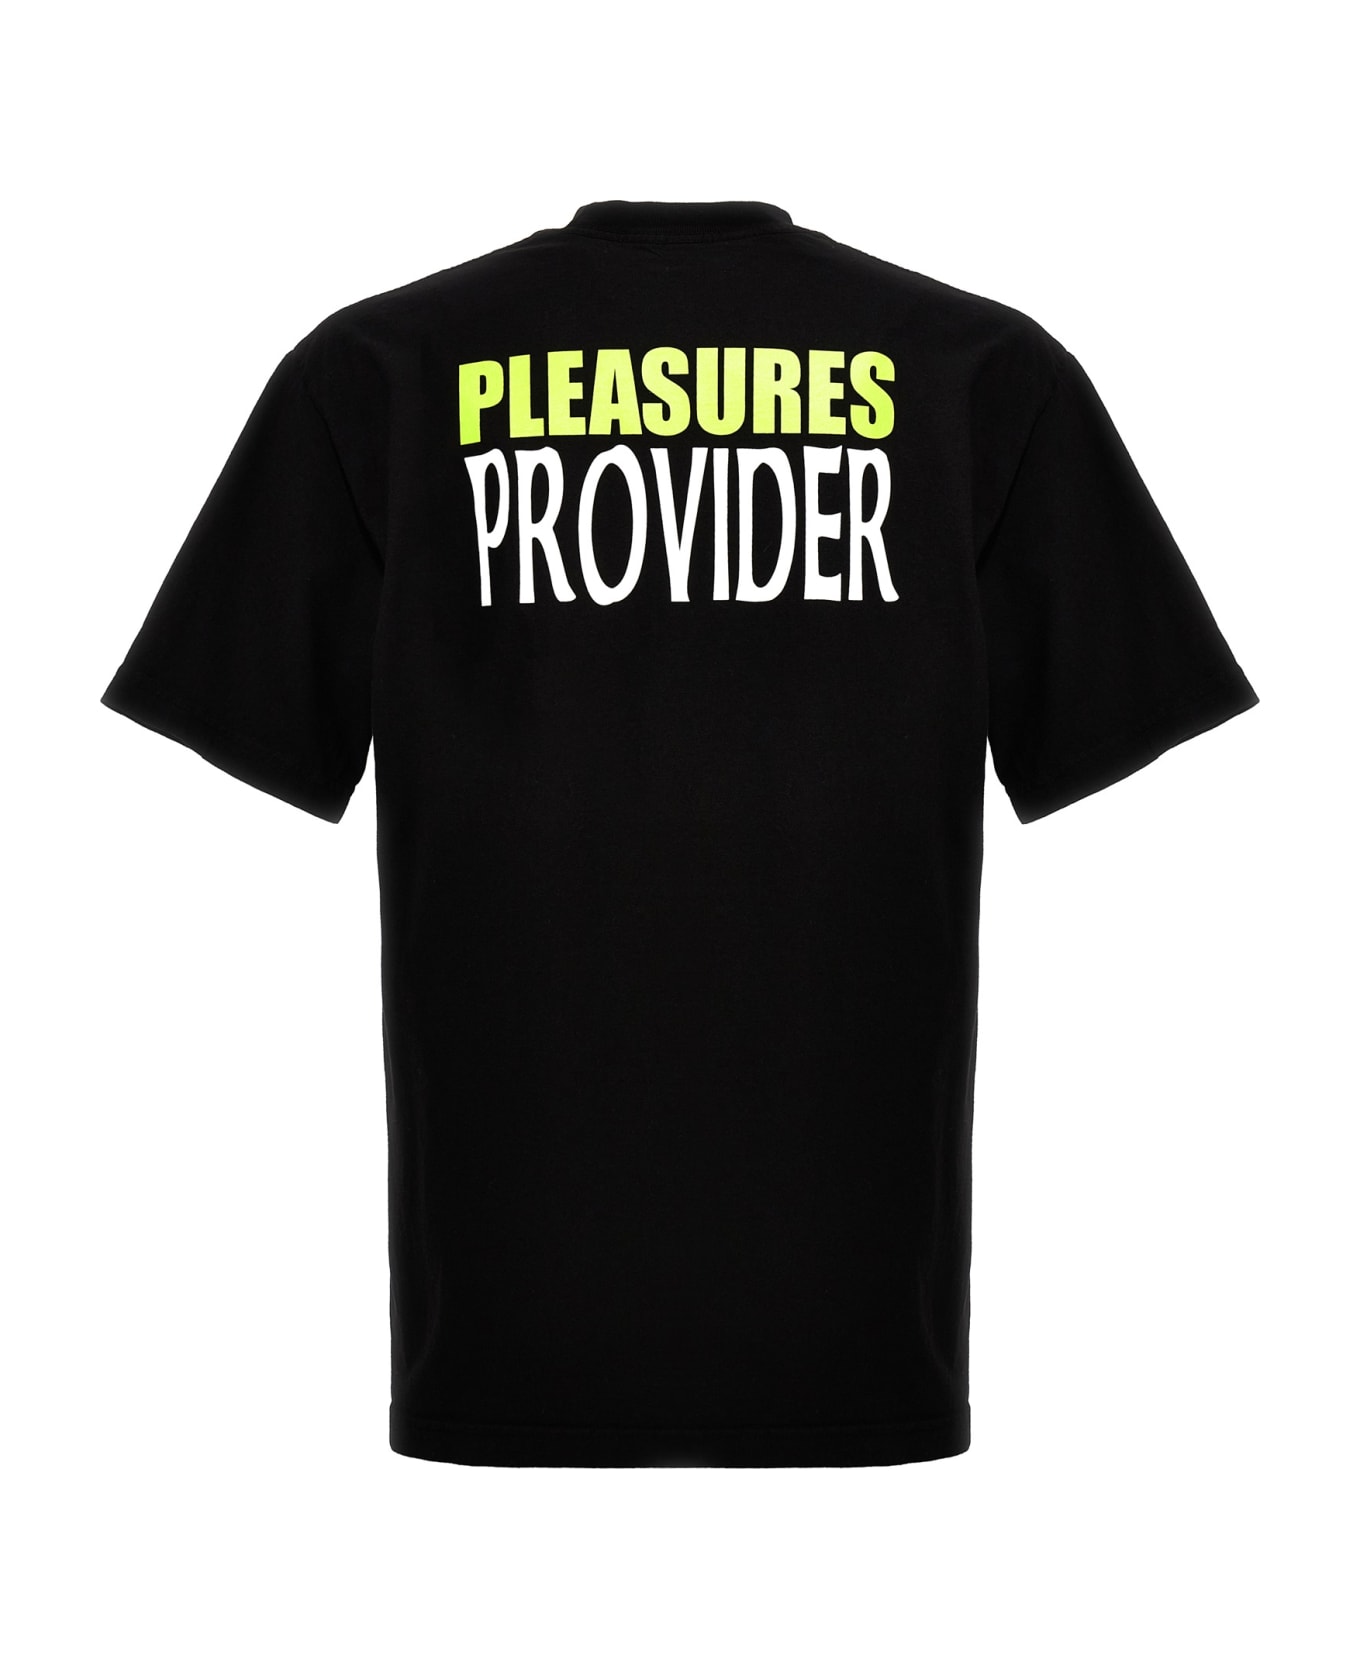 Pleasures 'provider' T-shirt - Black  